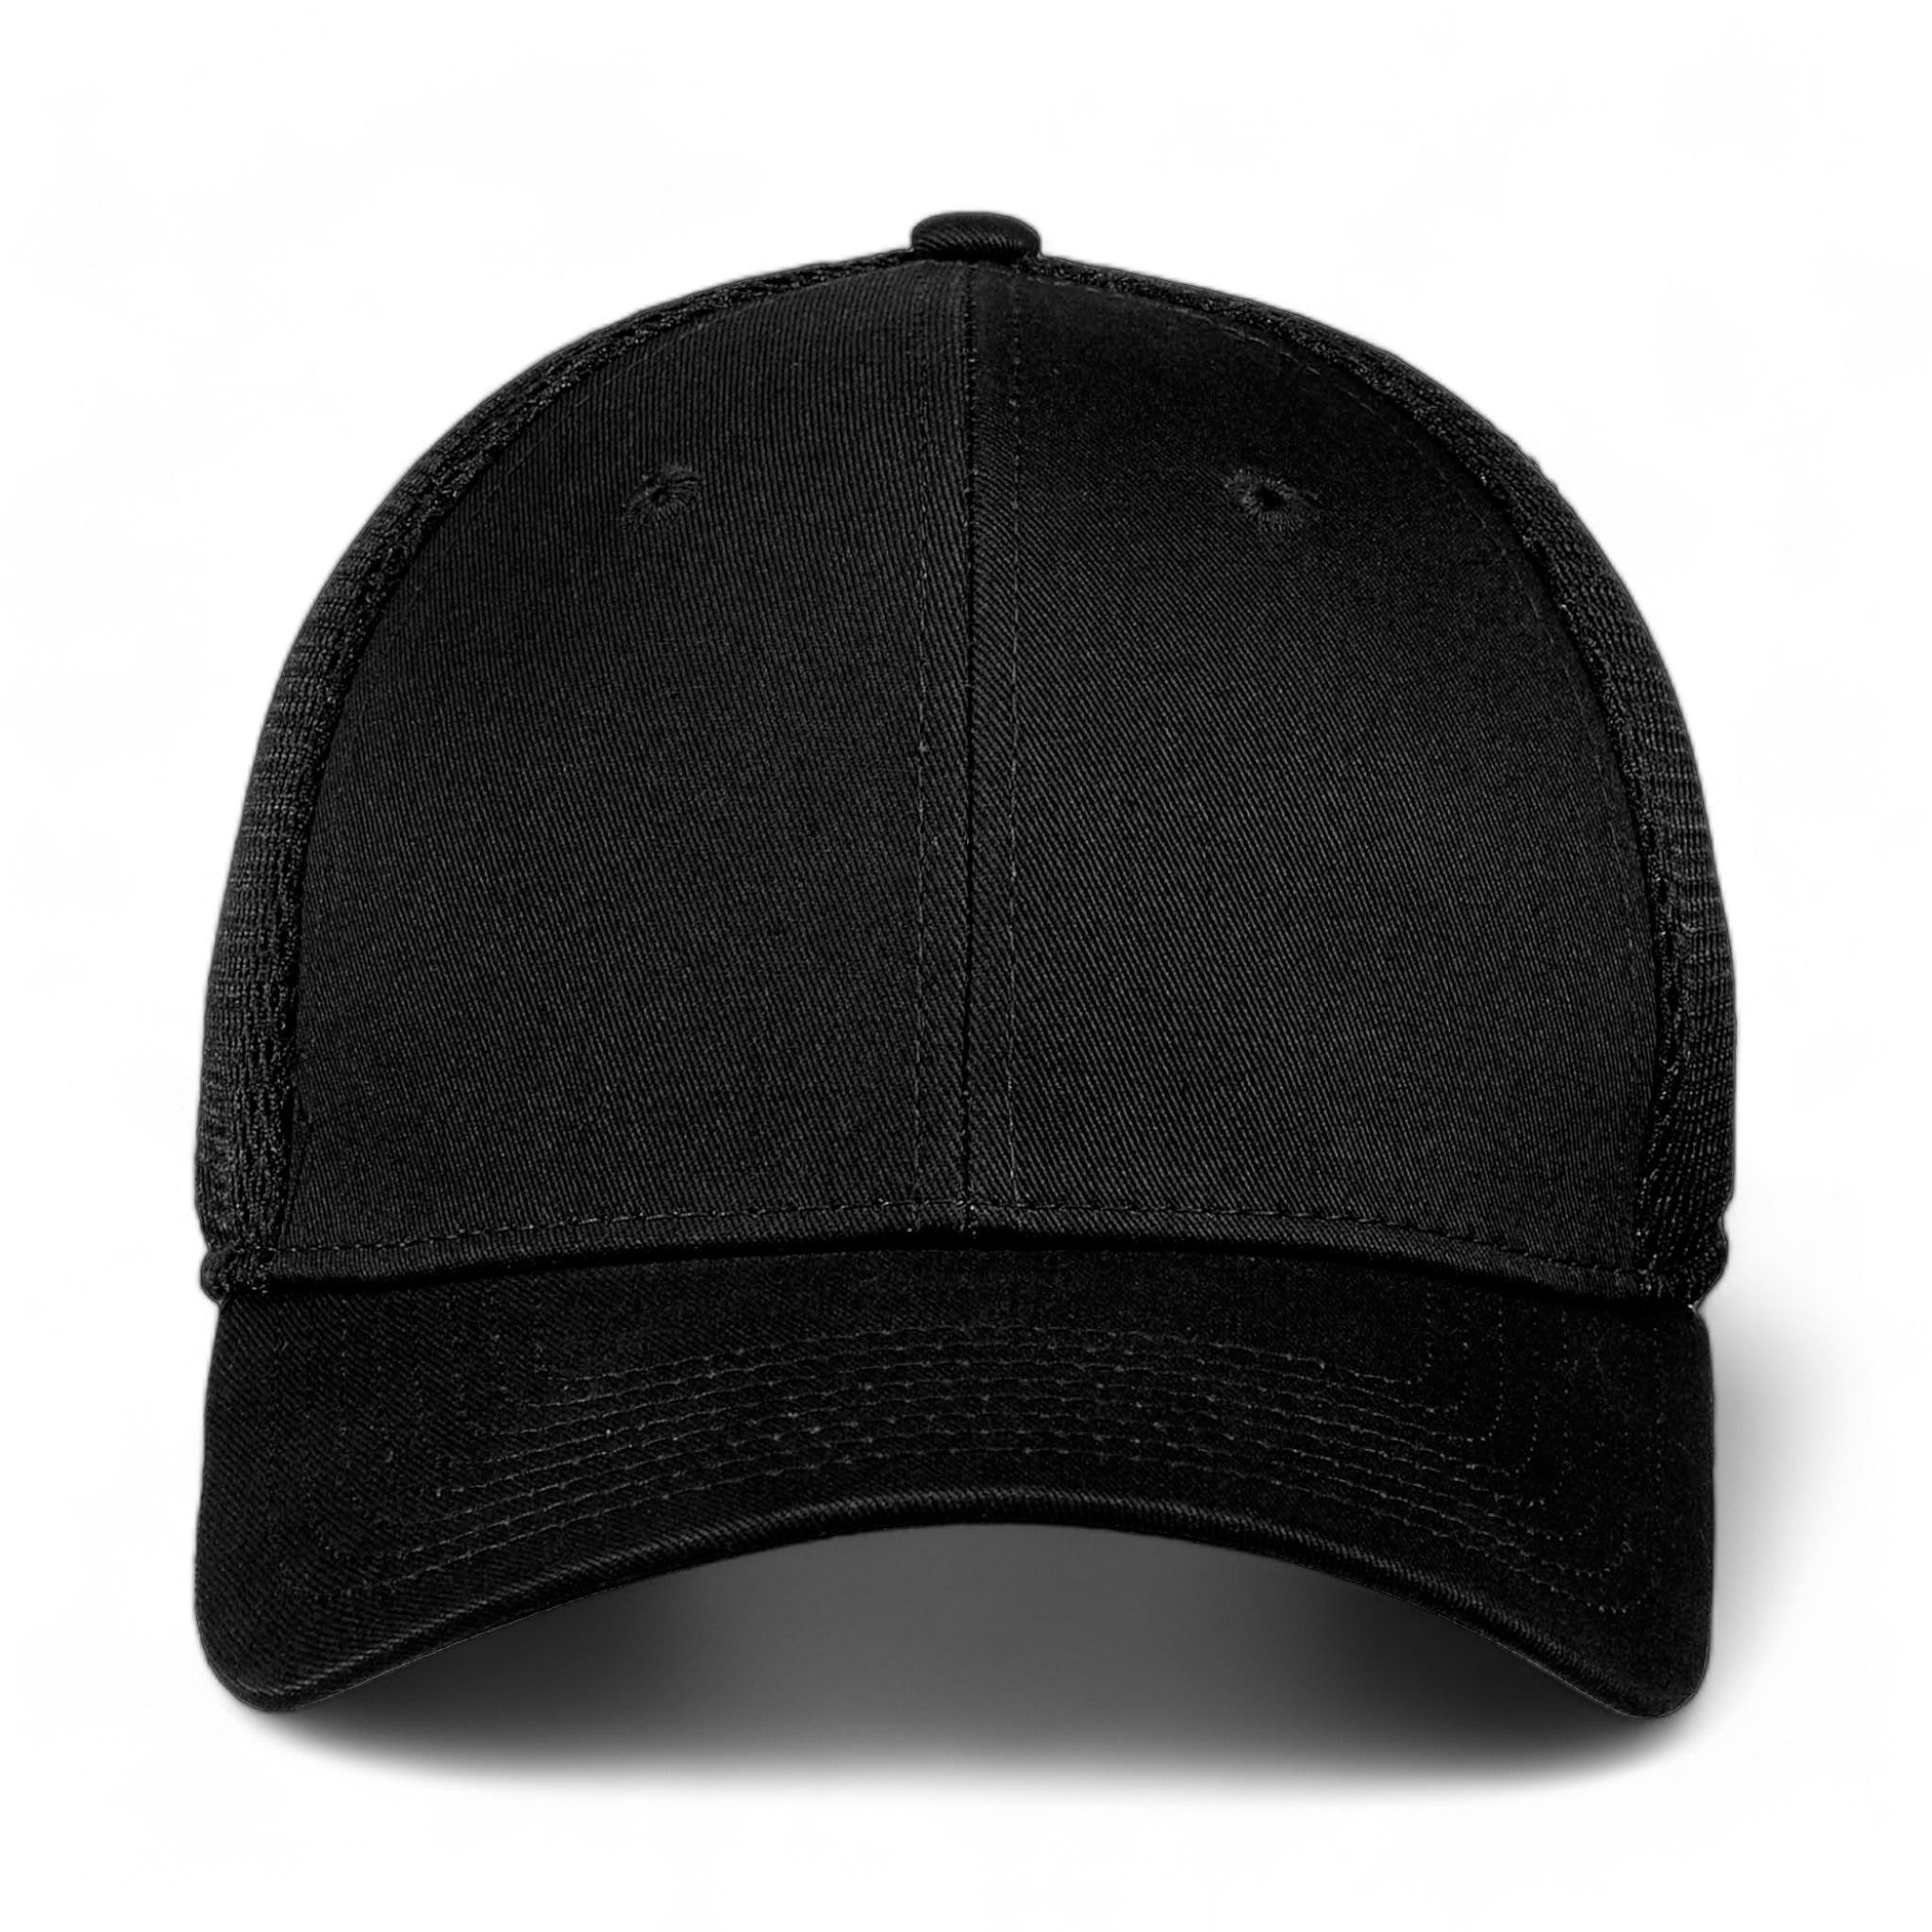 Front view of New Era NE1020 custom hat in black